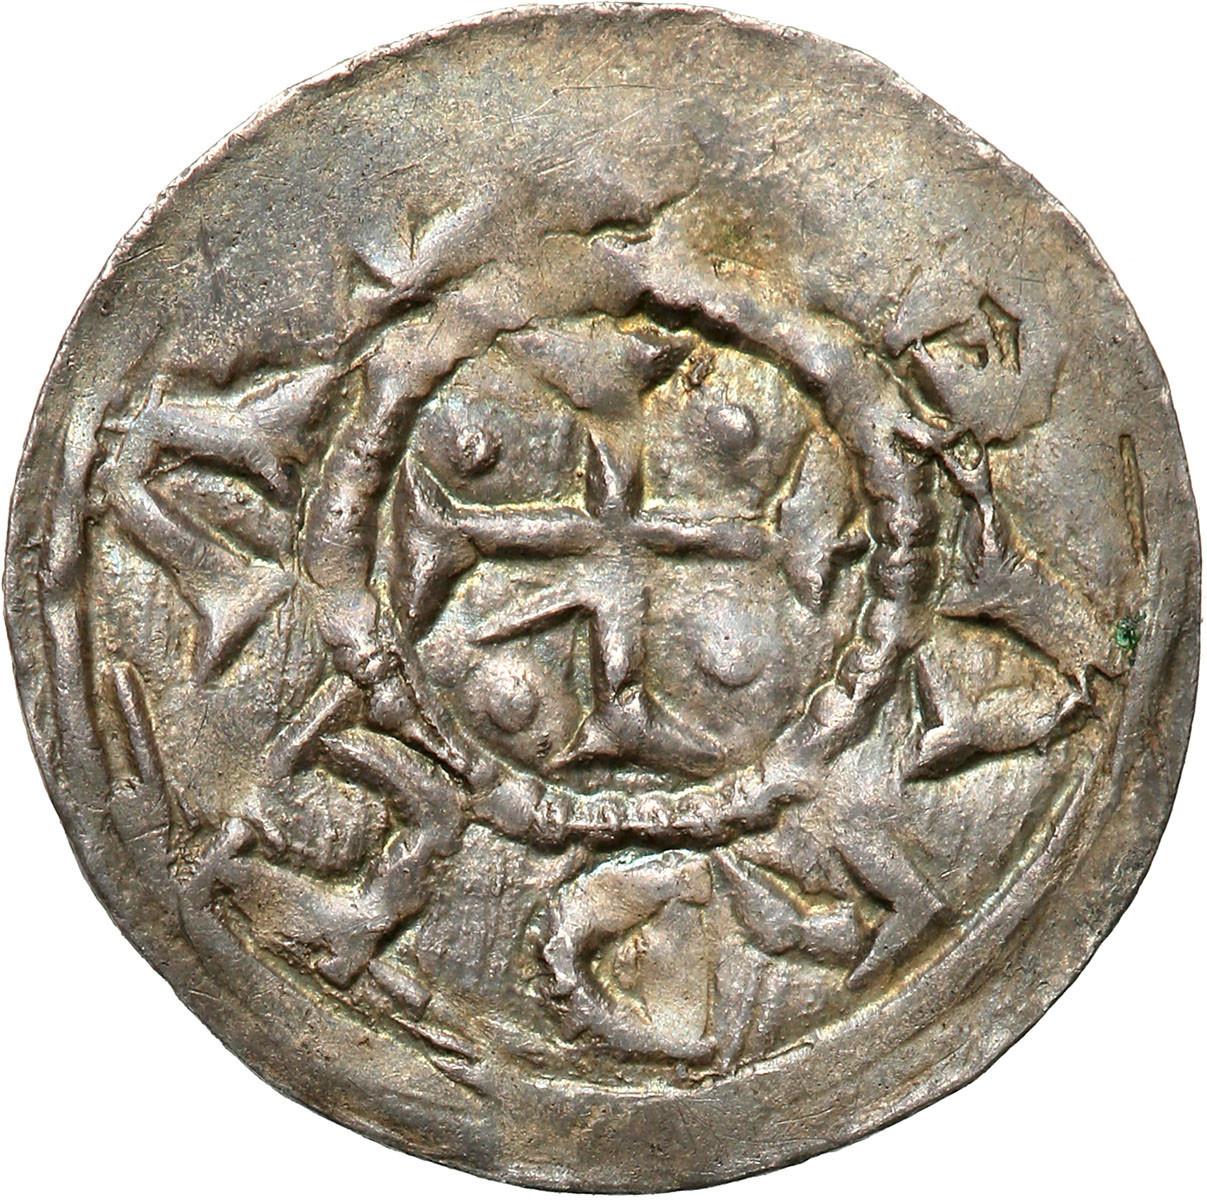 Bolesław III Krzywousty (1107-1138). Denar (1102-1138)